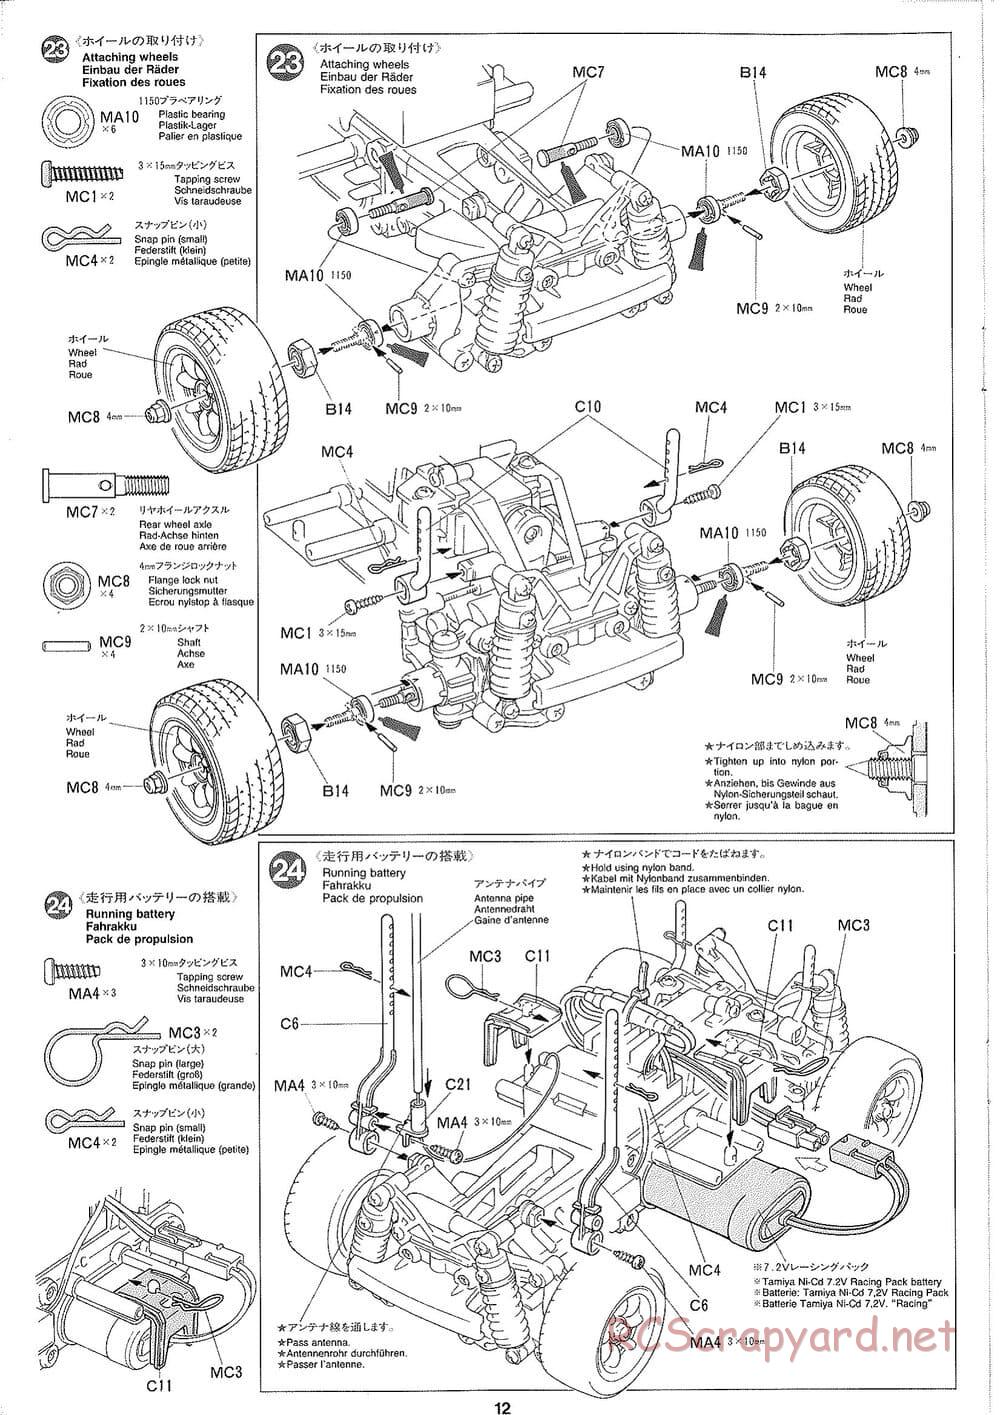 Tamiya - Rover Mini Cooper Racing - M03 Chassis - Manual - Page 12